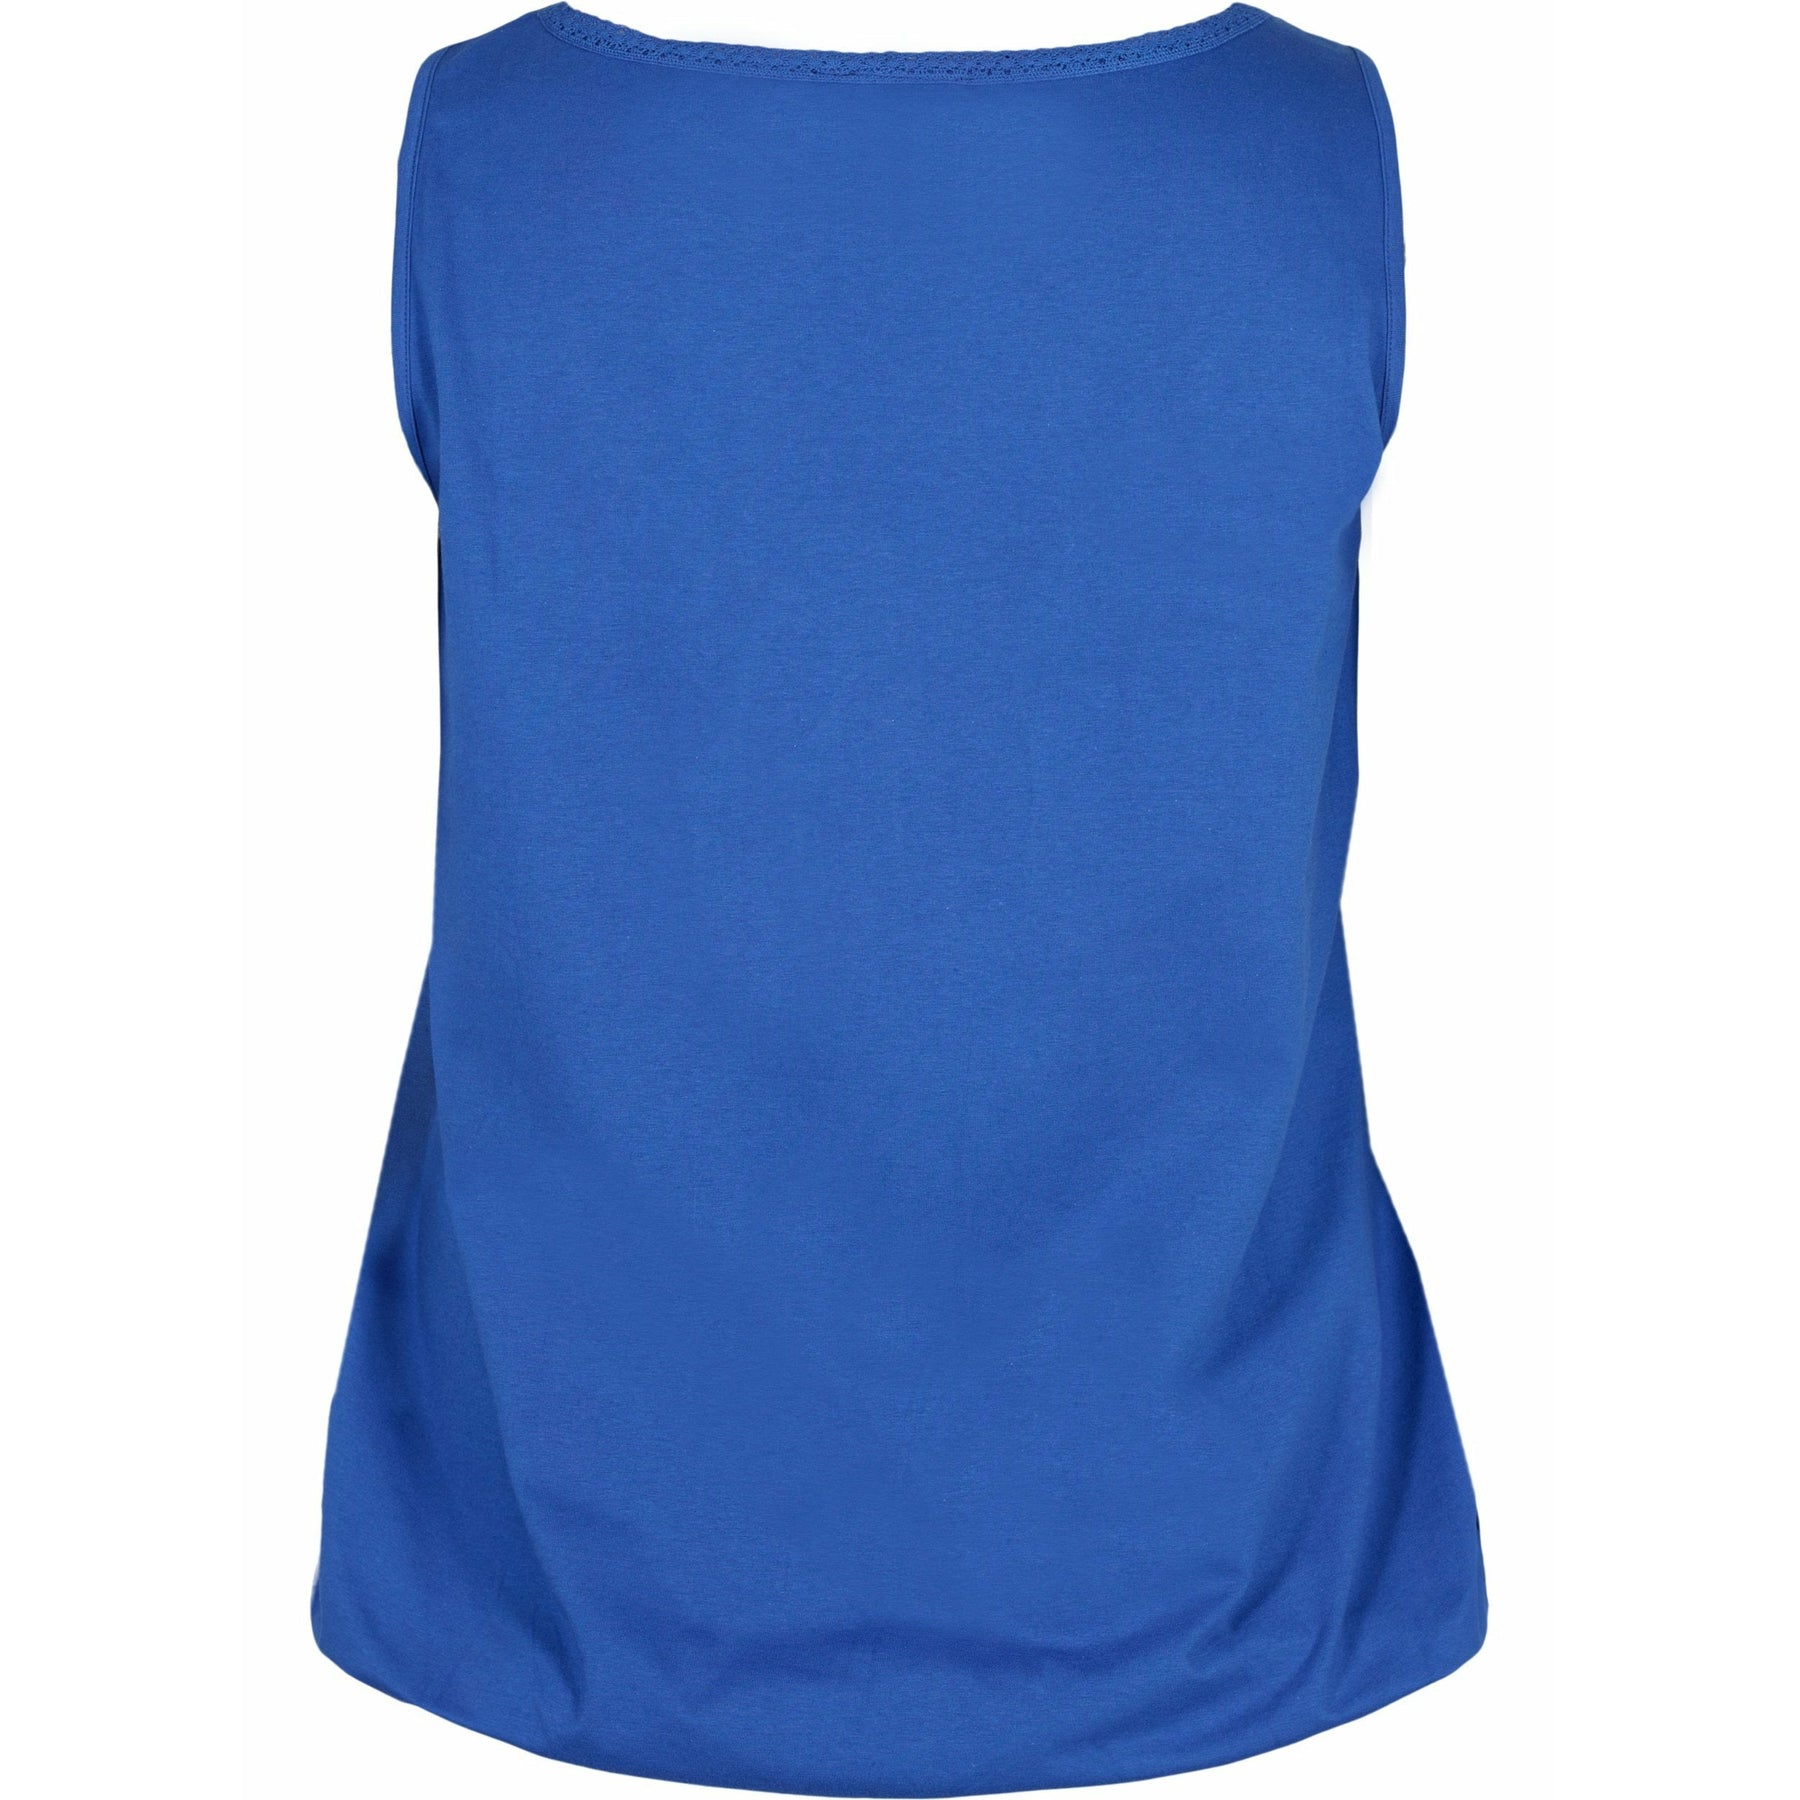 Zizzi Polly Vest Top in Dazzling Blue